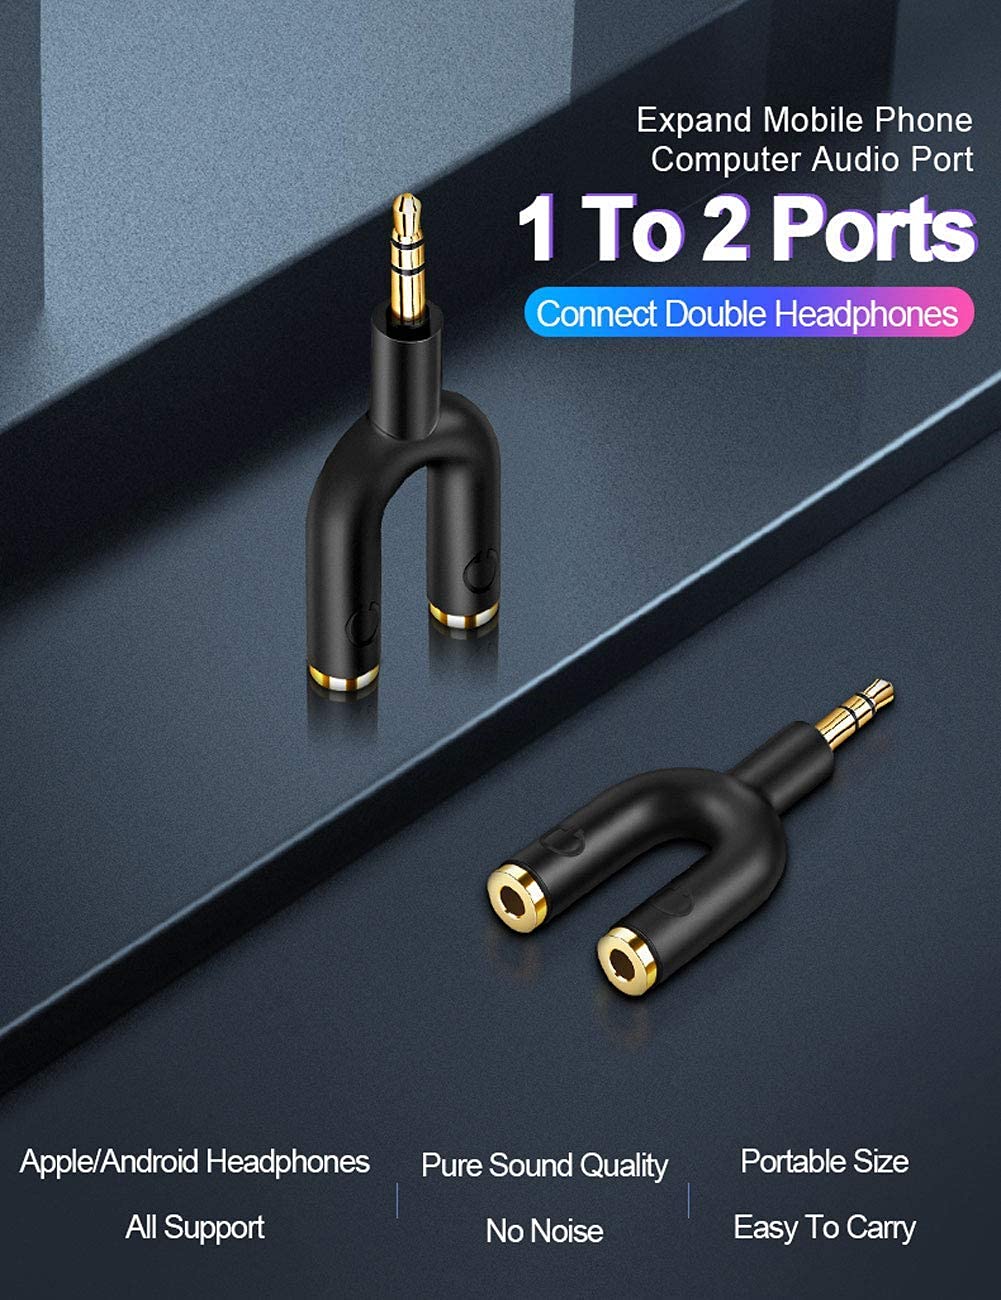 Bundle – 2 Items: USB C to 3.5mm Headphone Adapter and Headphone Splitter Adapter